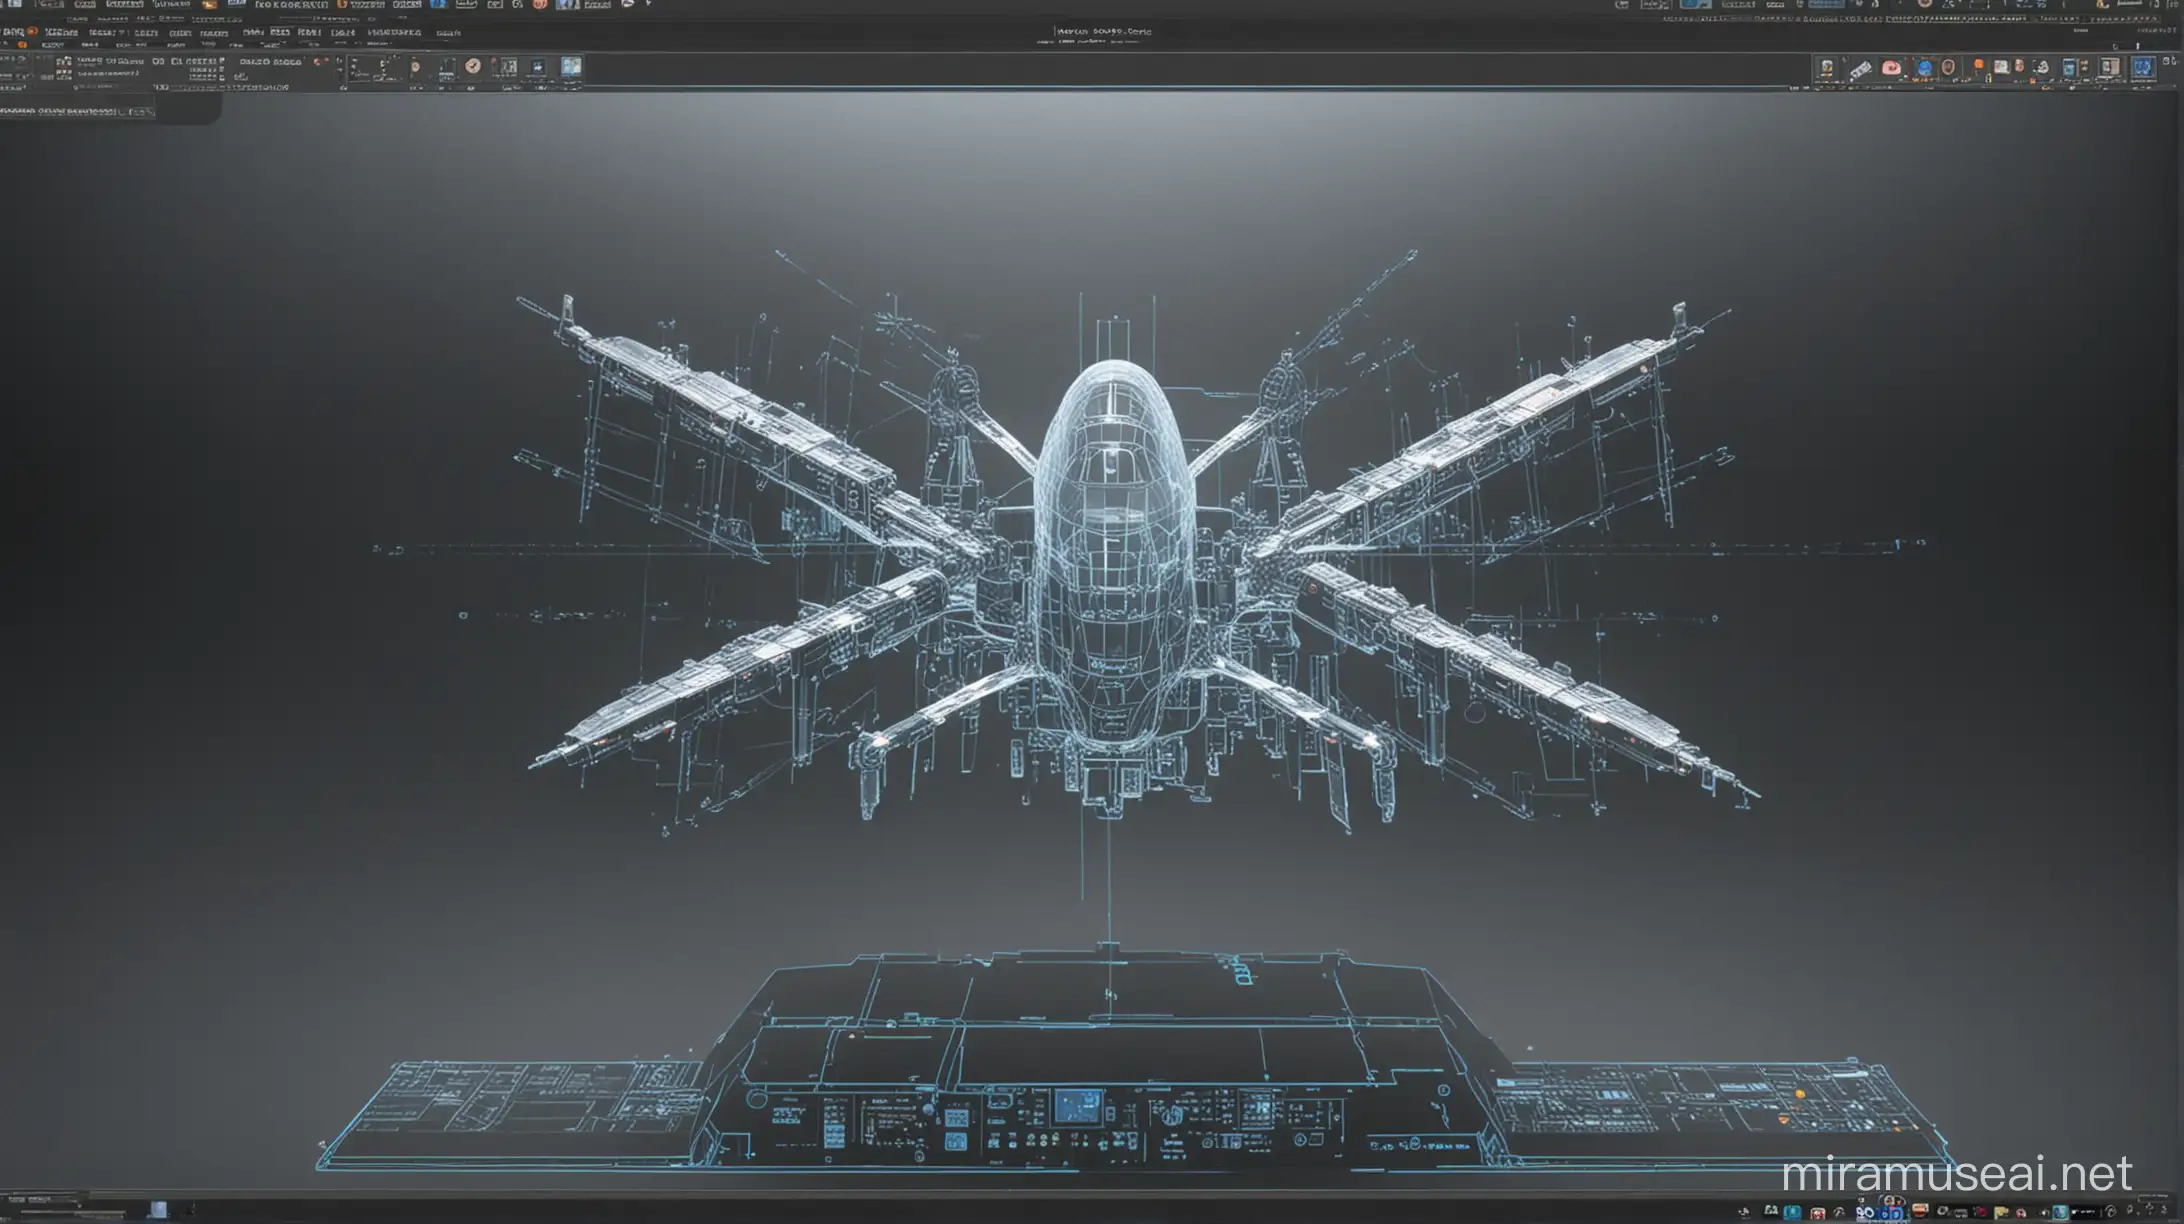 Interactive Holographic 3D Digital Engine Display